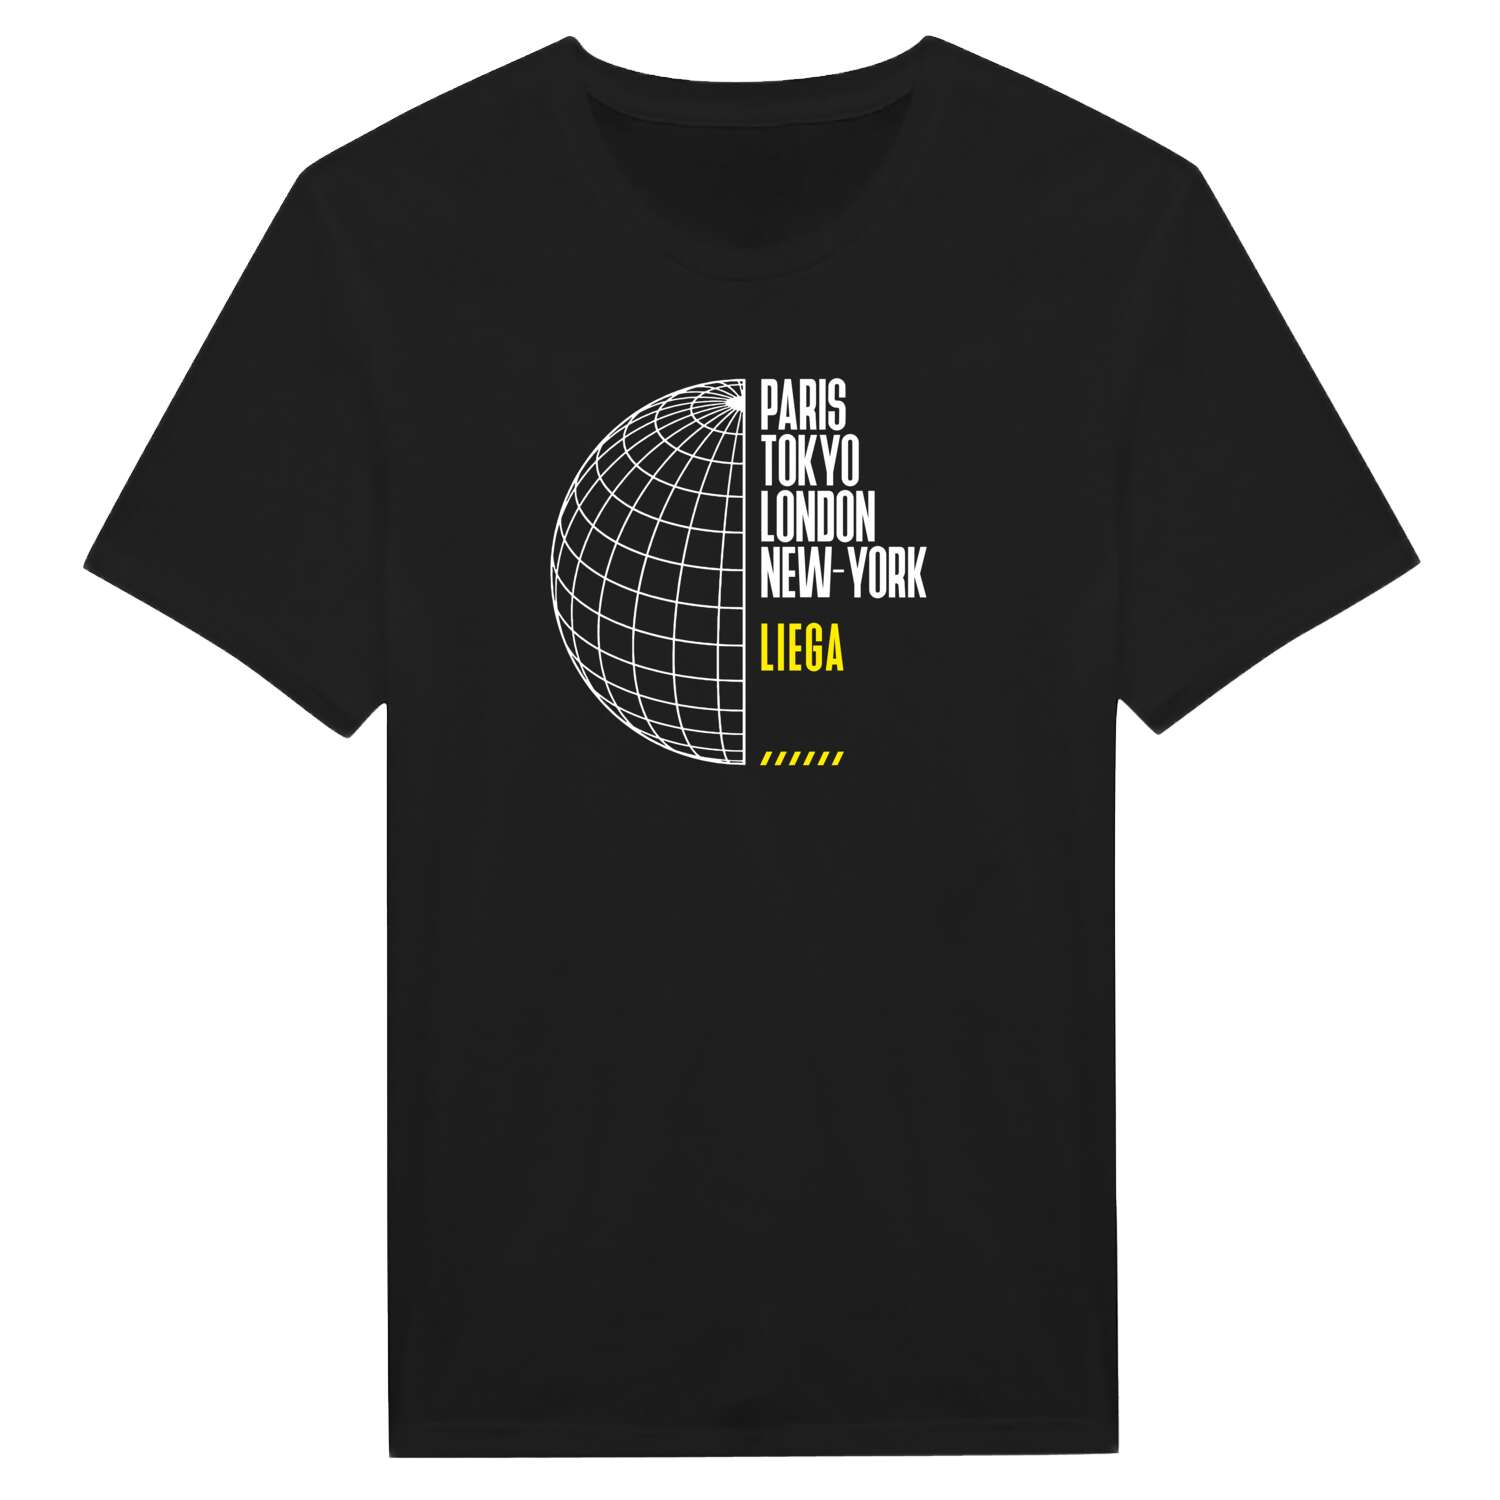 Liega T-Shirt »Paris Tokyo London«